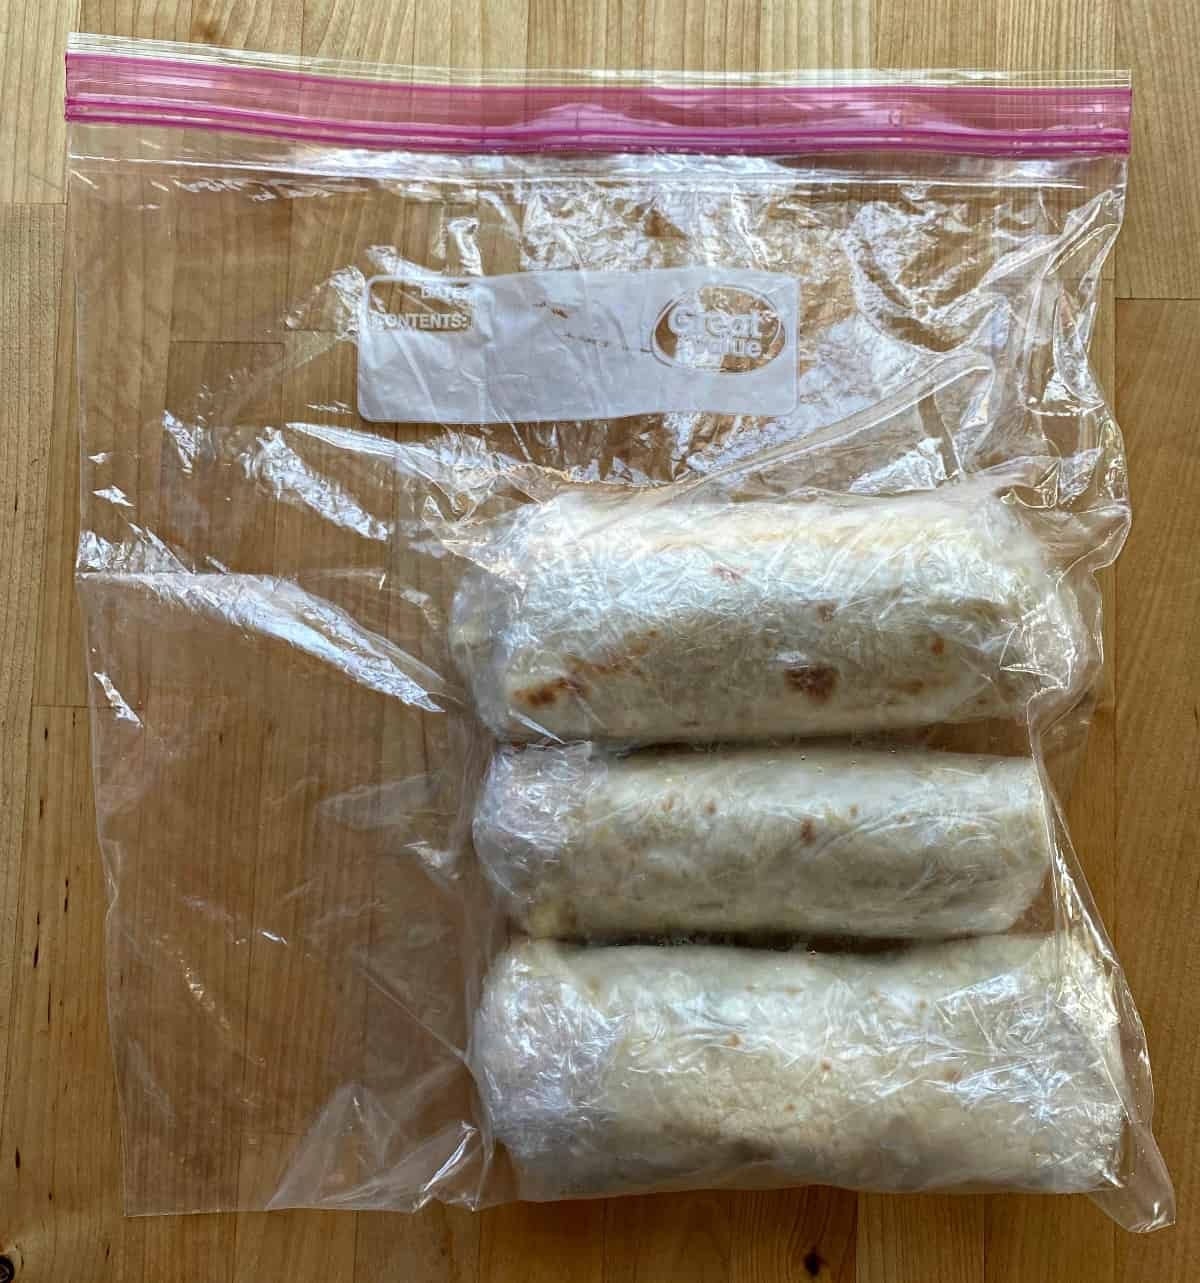 Frozen burritos in a plastic, sealable bag. 